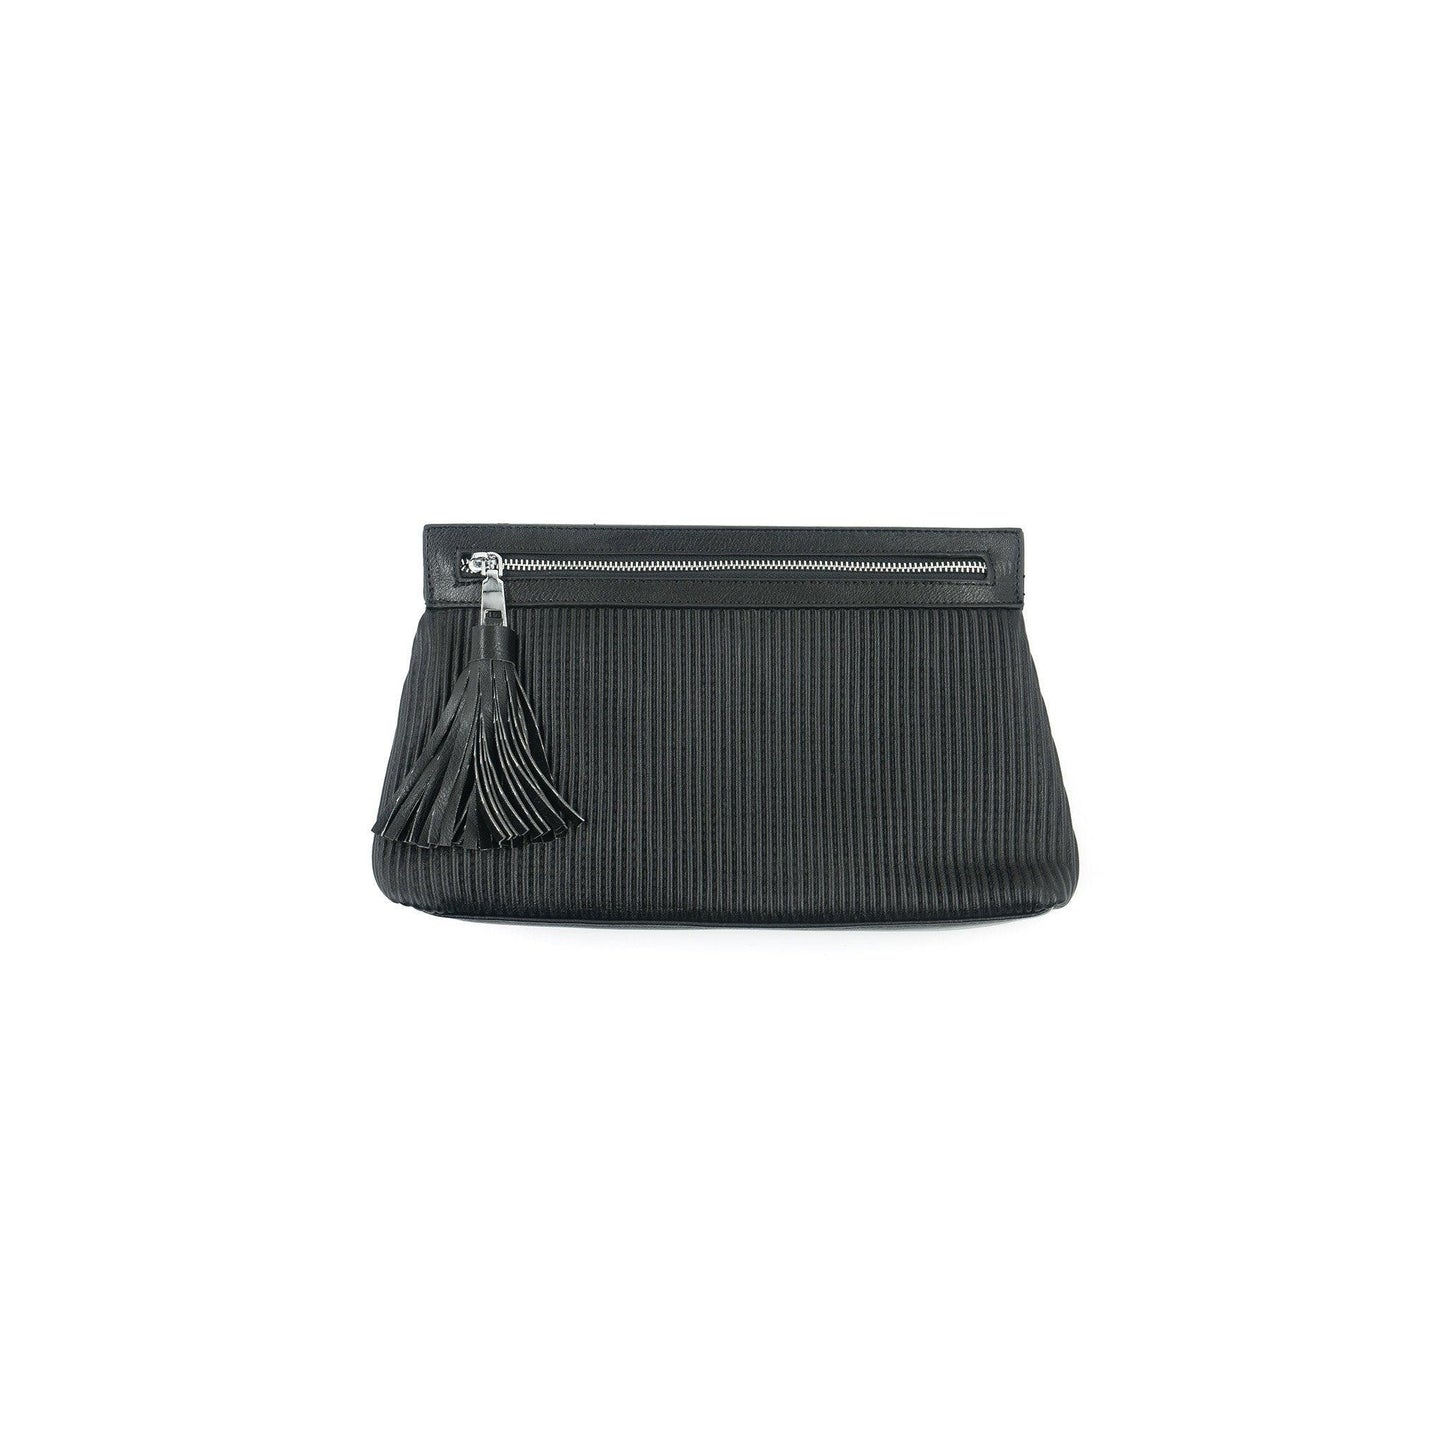 plated zipper clutch/crossbody/wristlet-Accessory:Bag-BC Handbags-Black-2310-RK Collections Boutique